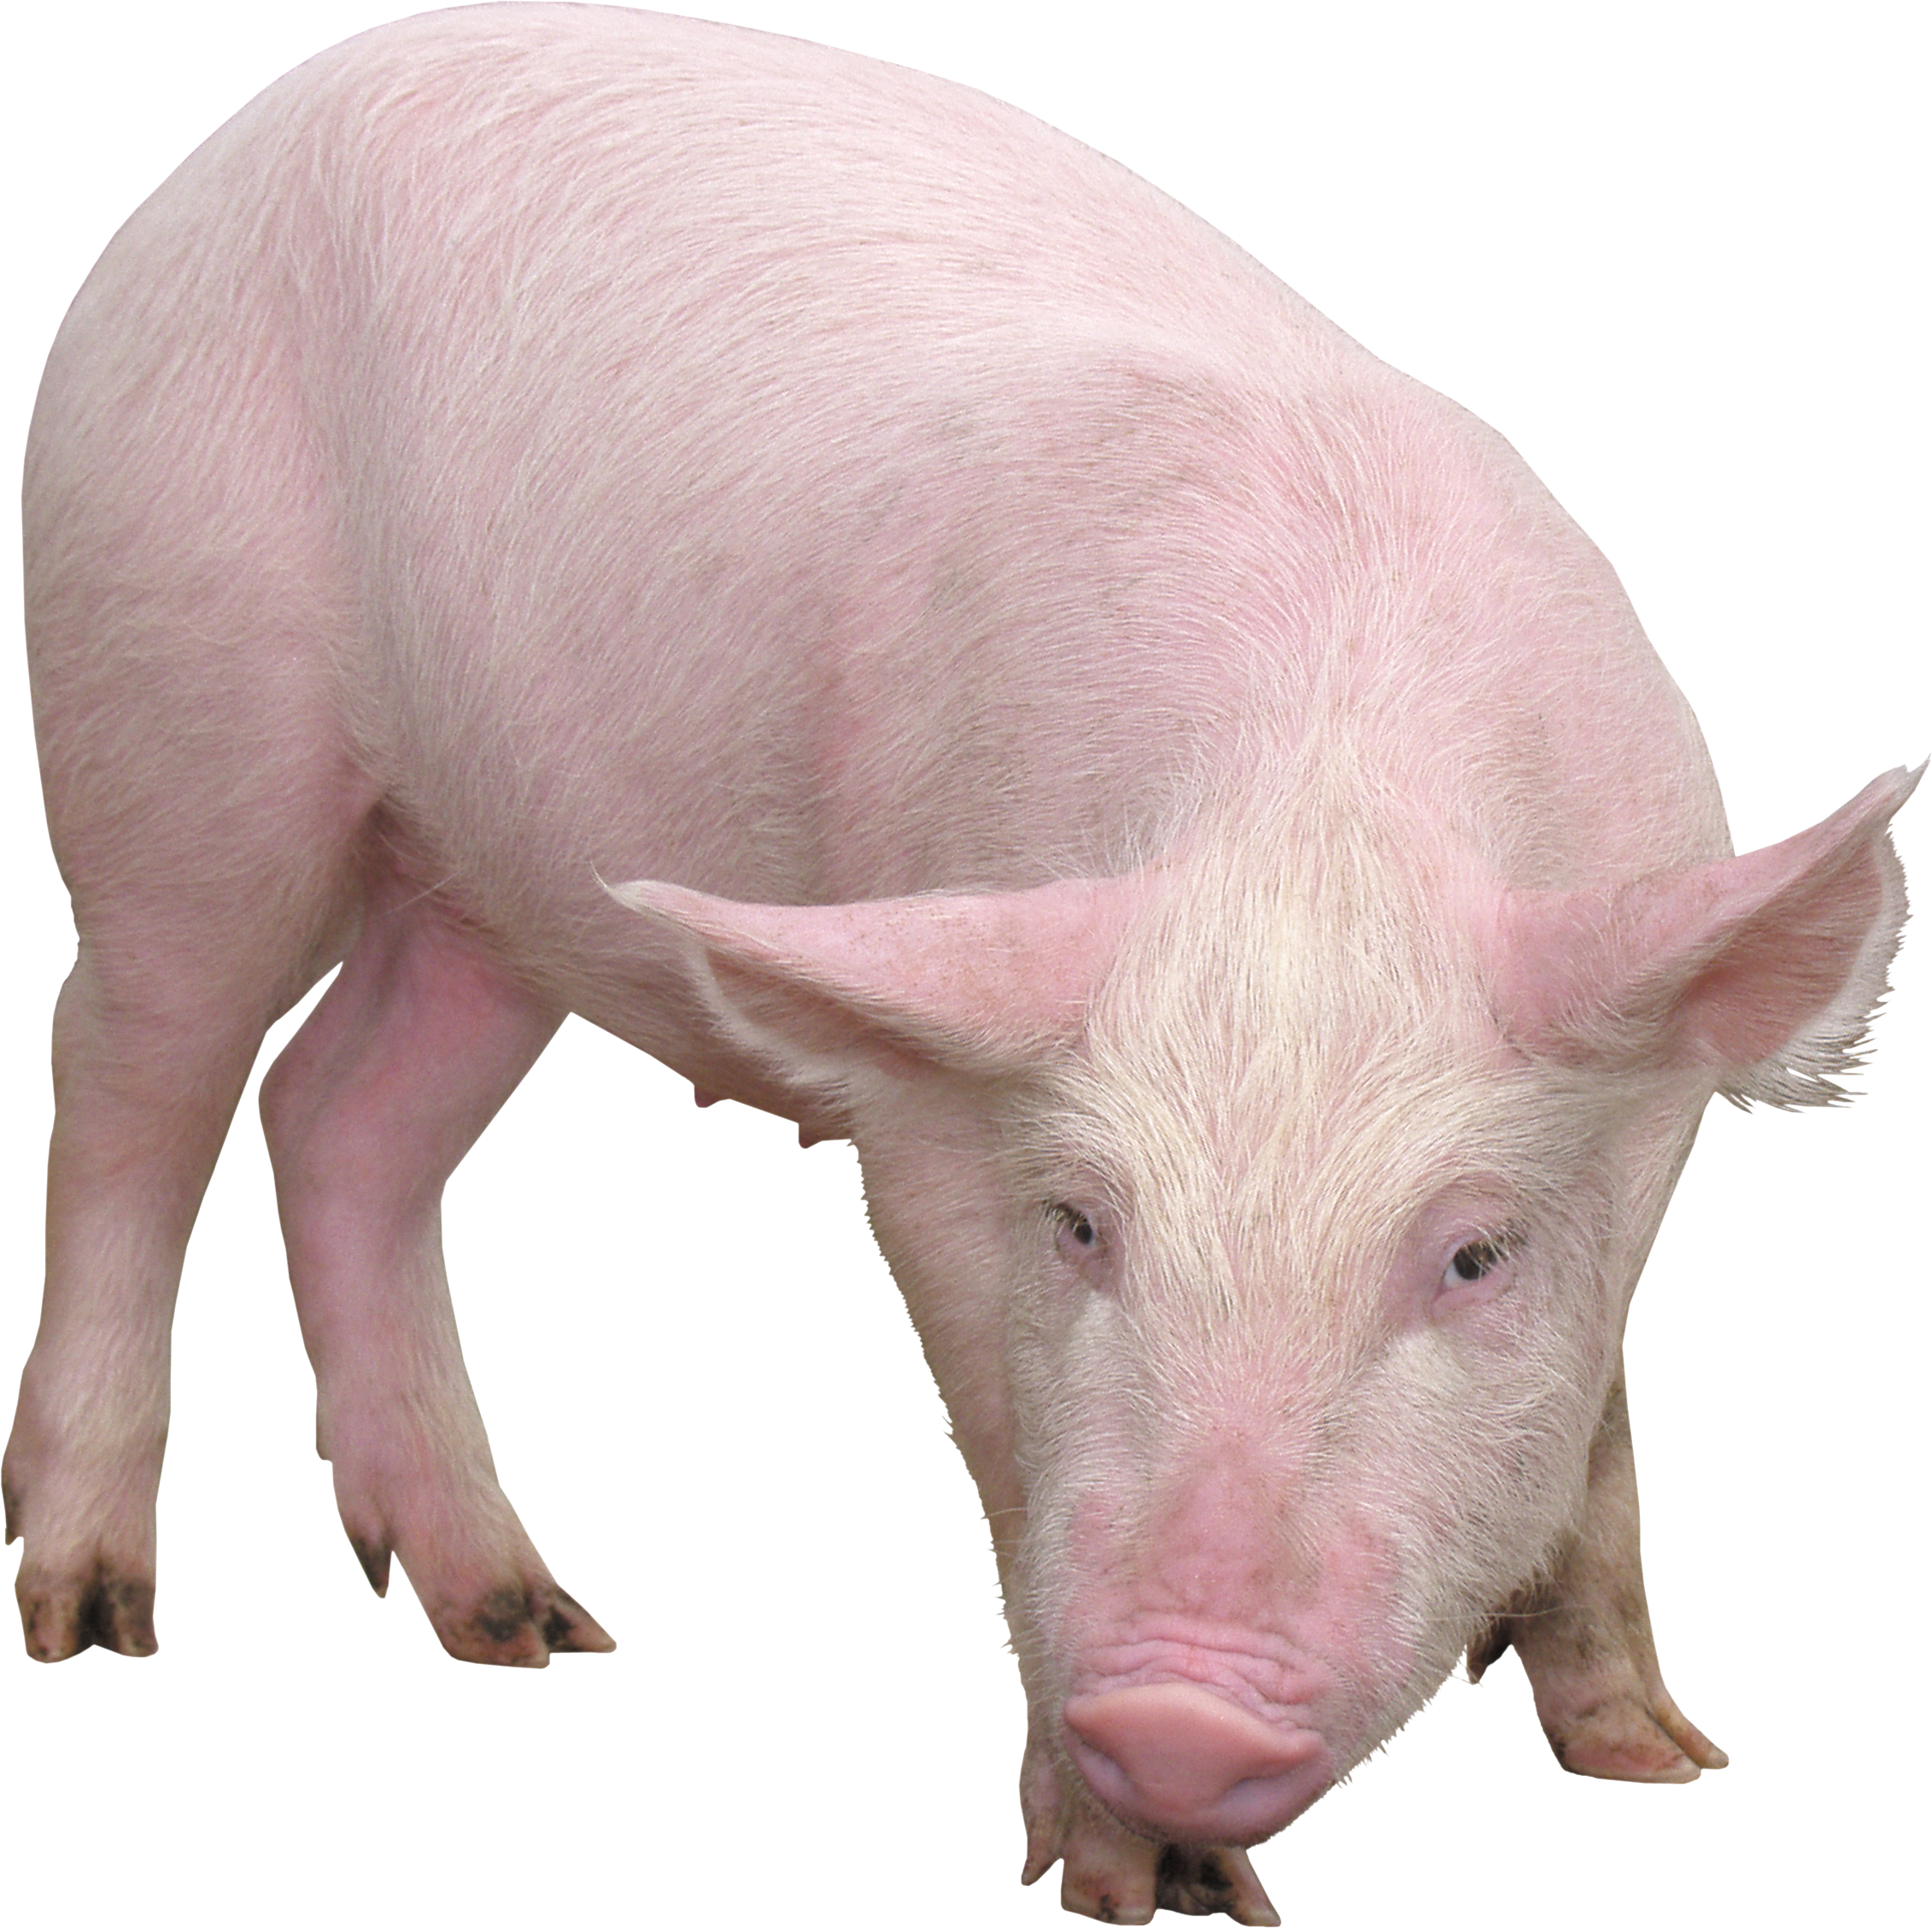 Pig Png Image - Pig, Transparent background PNG HD thumbnail